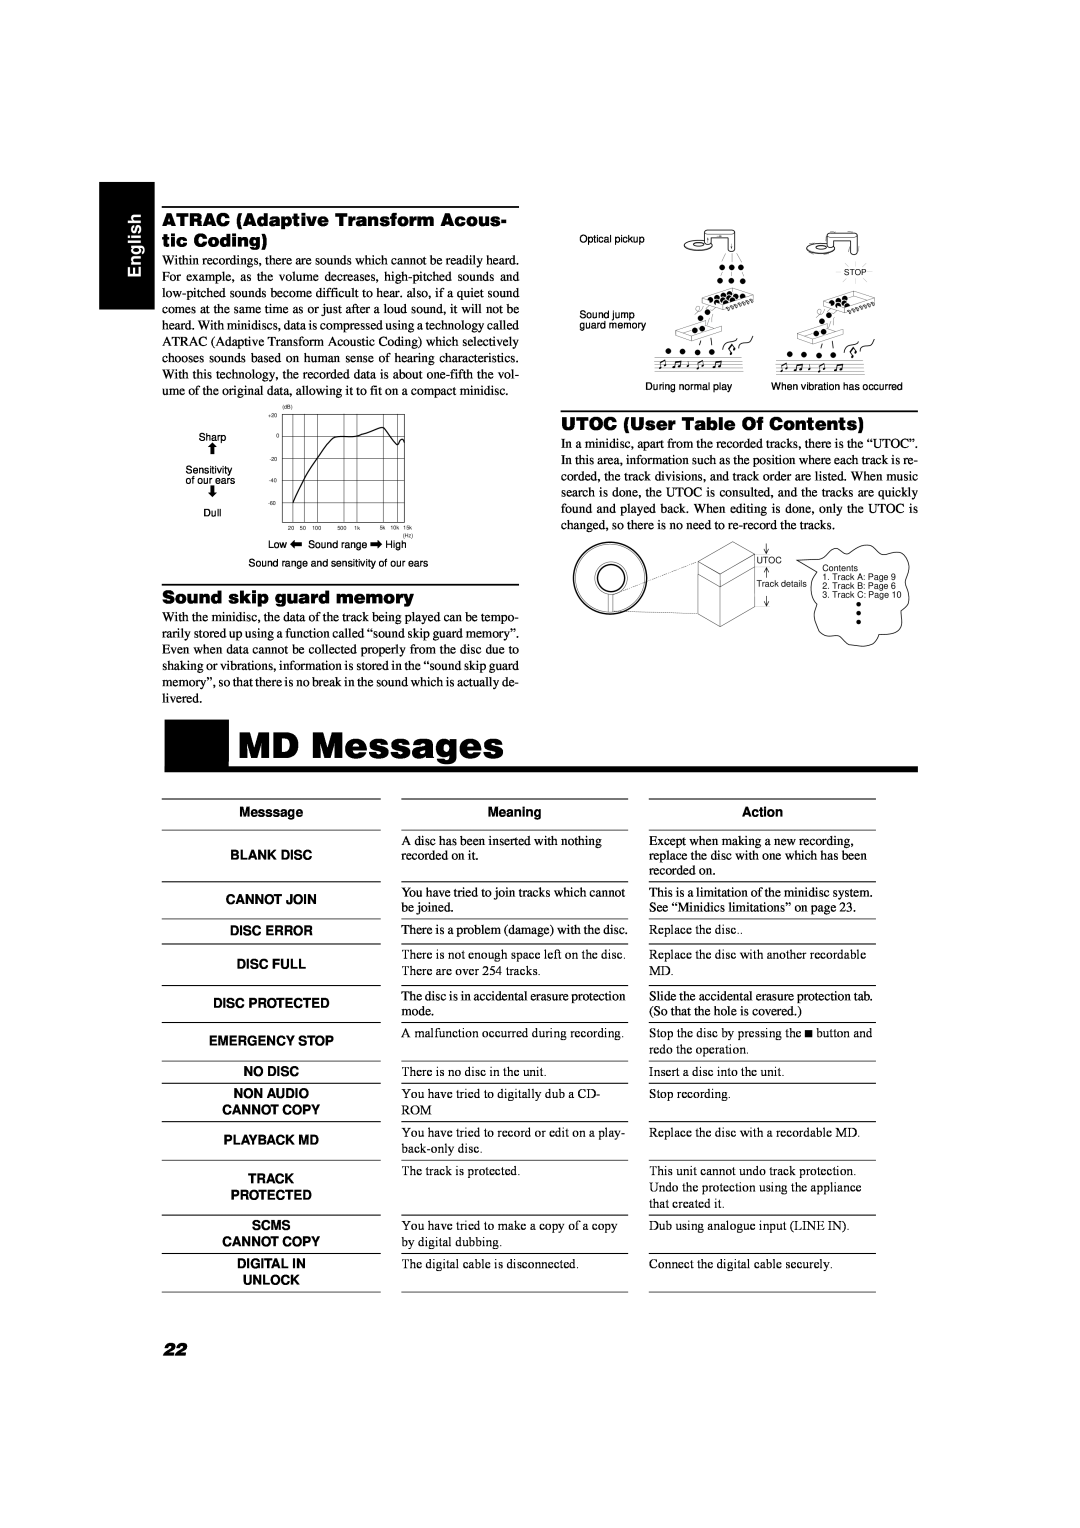 JVC FS-MD9000 manual MD Messages, ATRAC Adaptive Transform Acous, tic Coding, Sound skip guard memory, English 